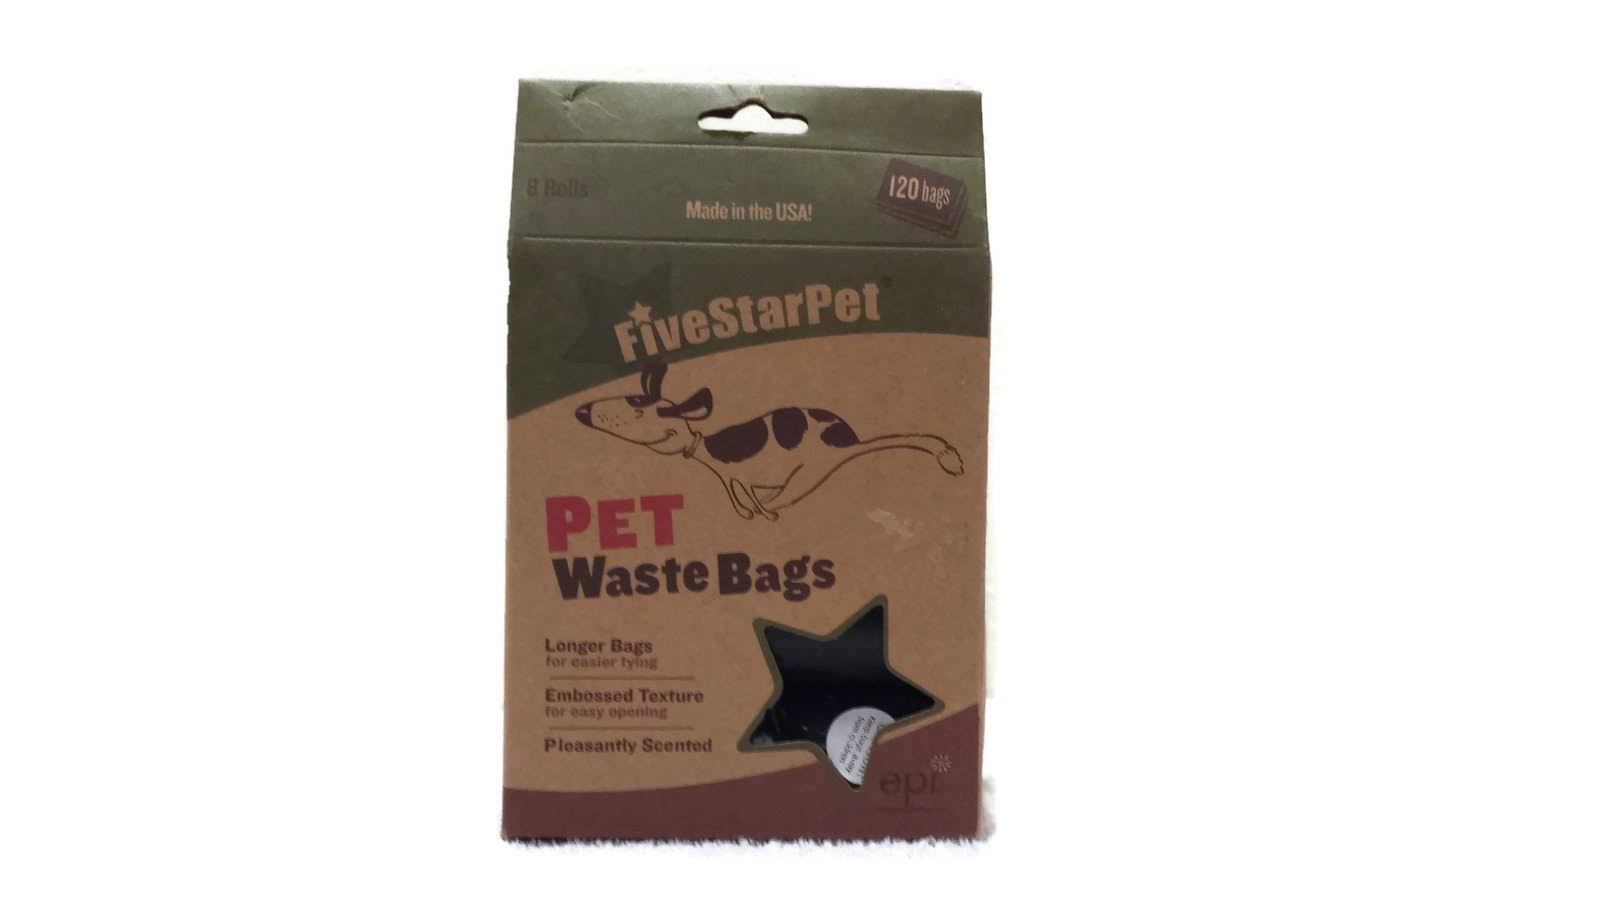 Five Star Pet Waste Bags - 8 Rolls, 120 Bags